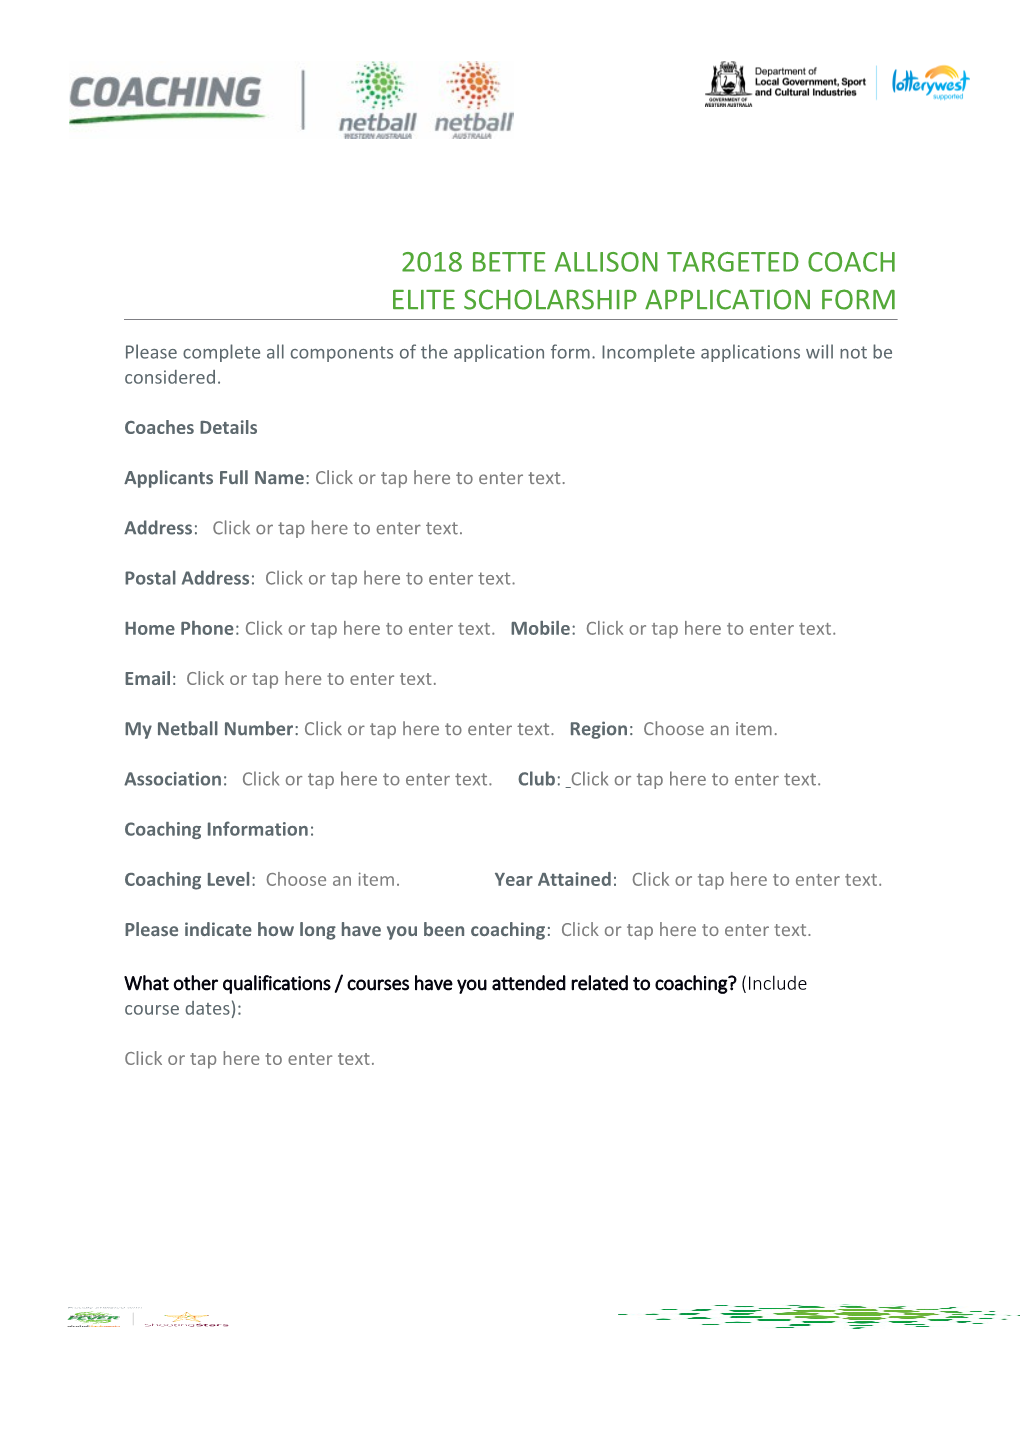 2018 Bette Allison Targeted Coach Elite Scholarship Application Form